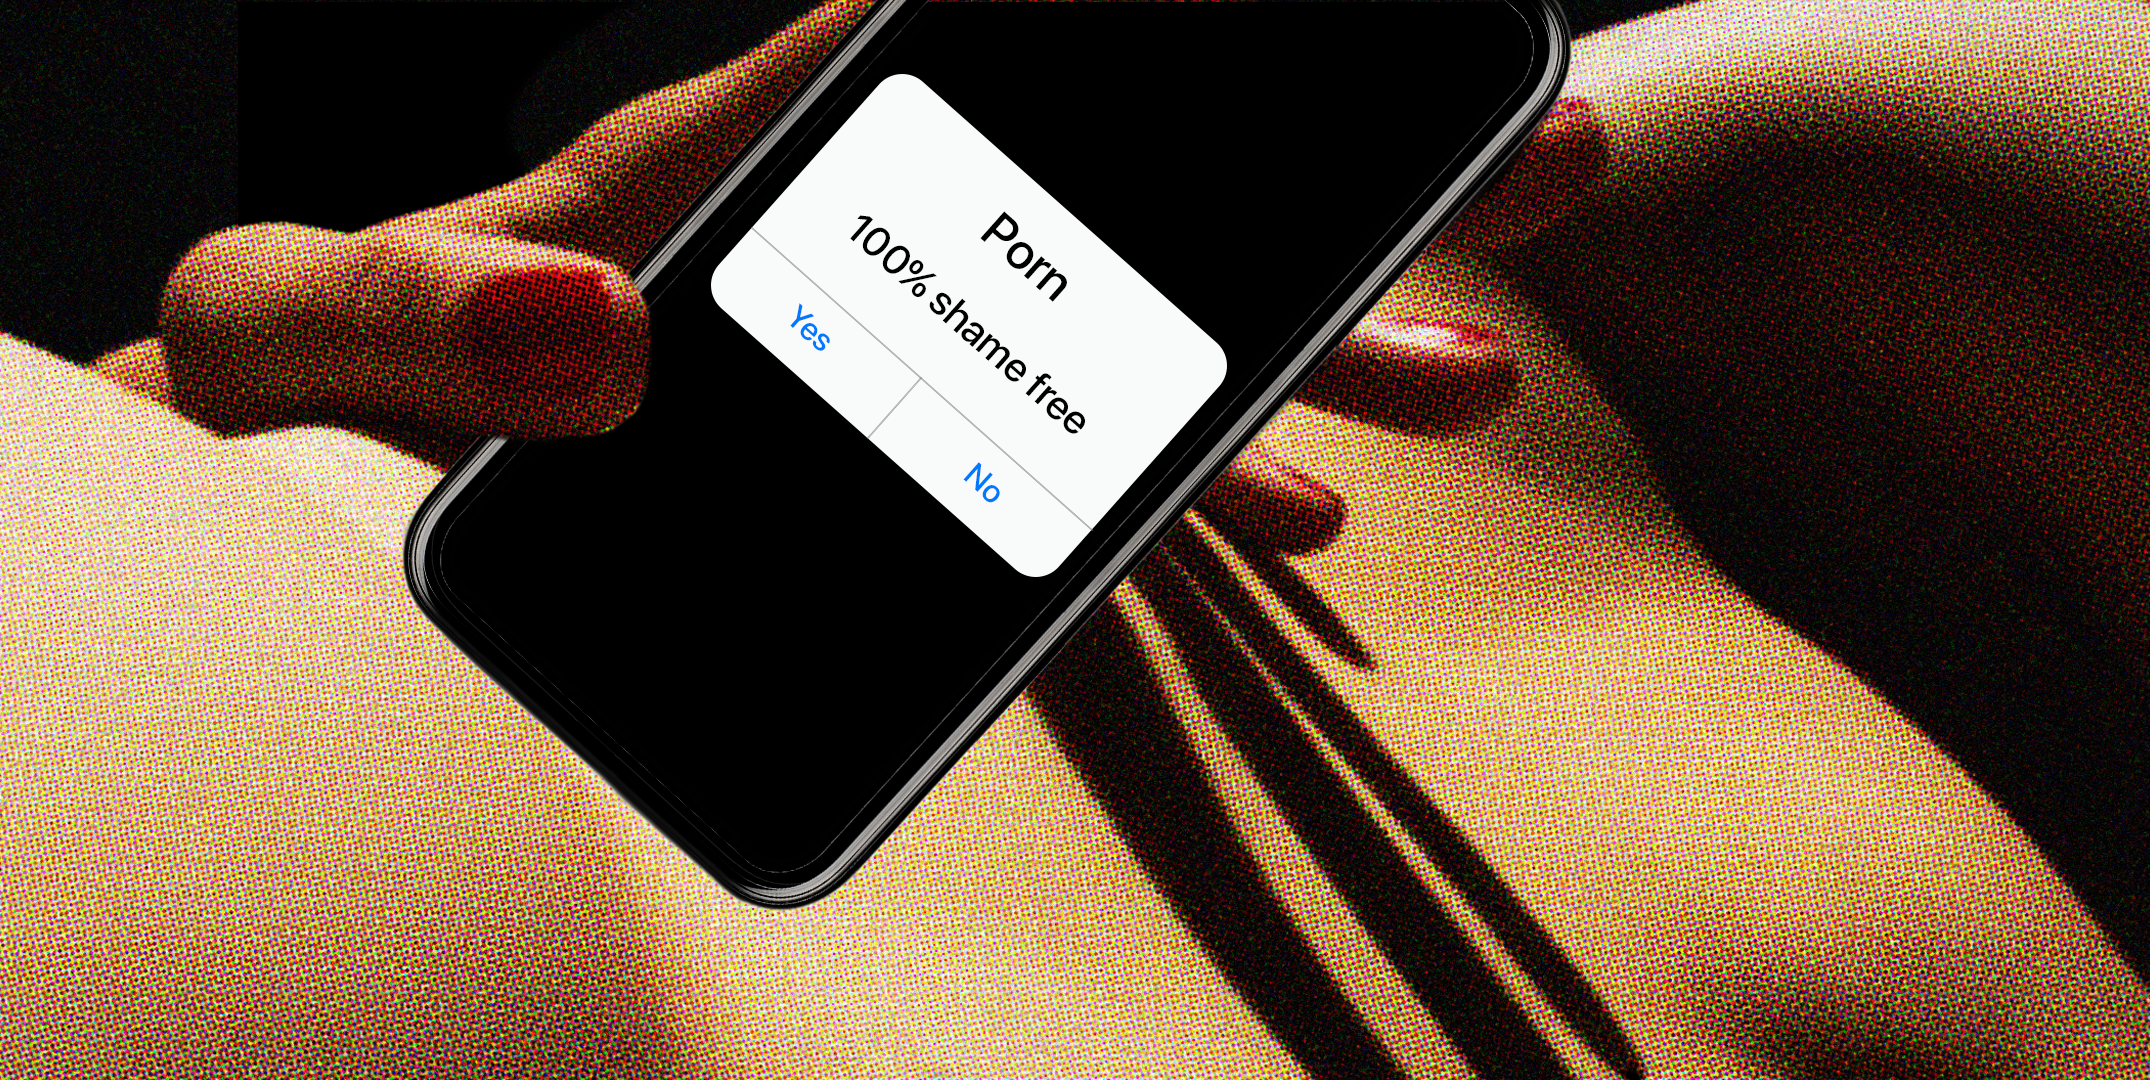 Porn Sites For Normal Phones - 14 Audio Porn Options - 9 Alternatives to Porn